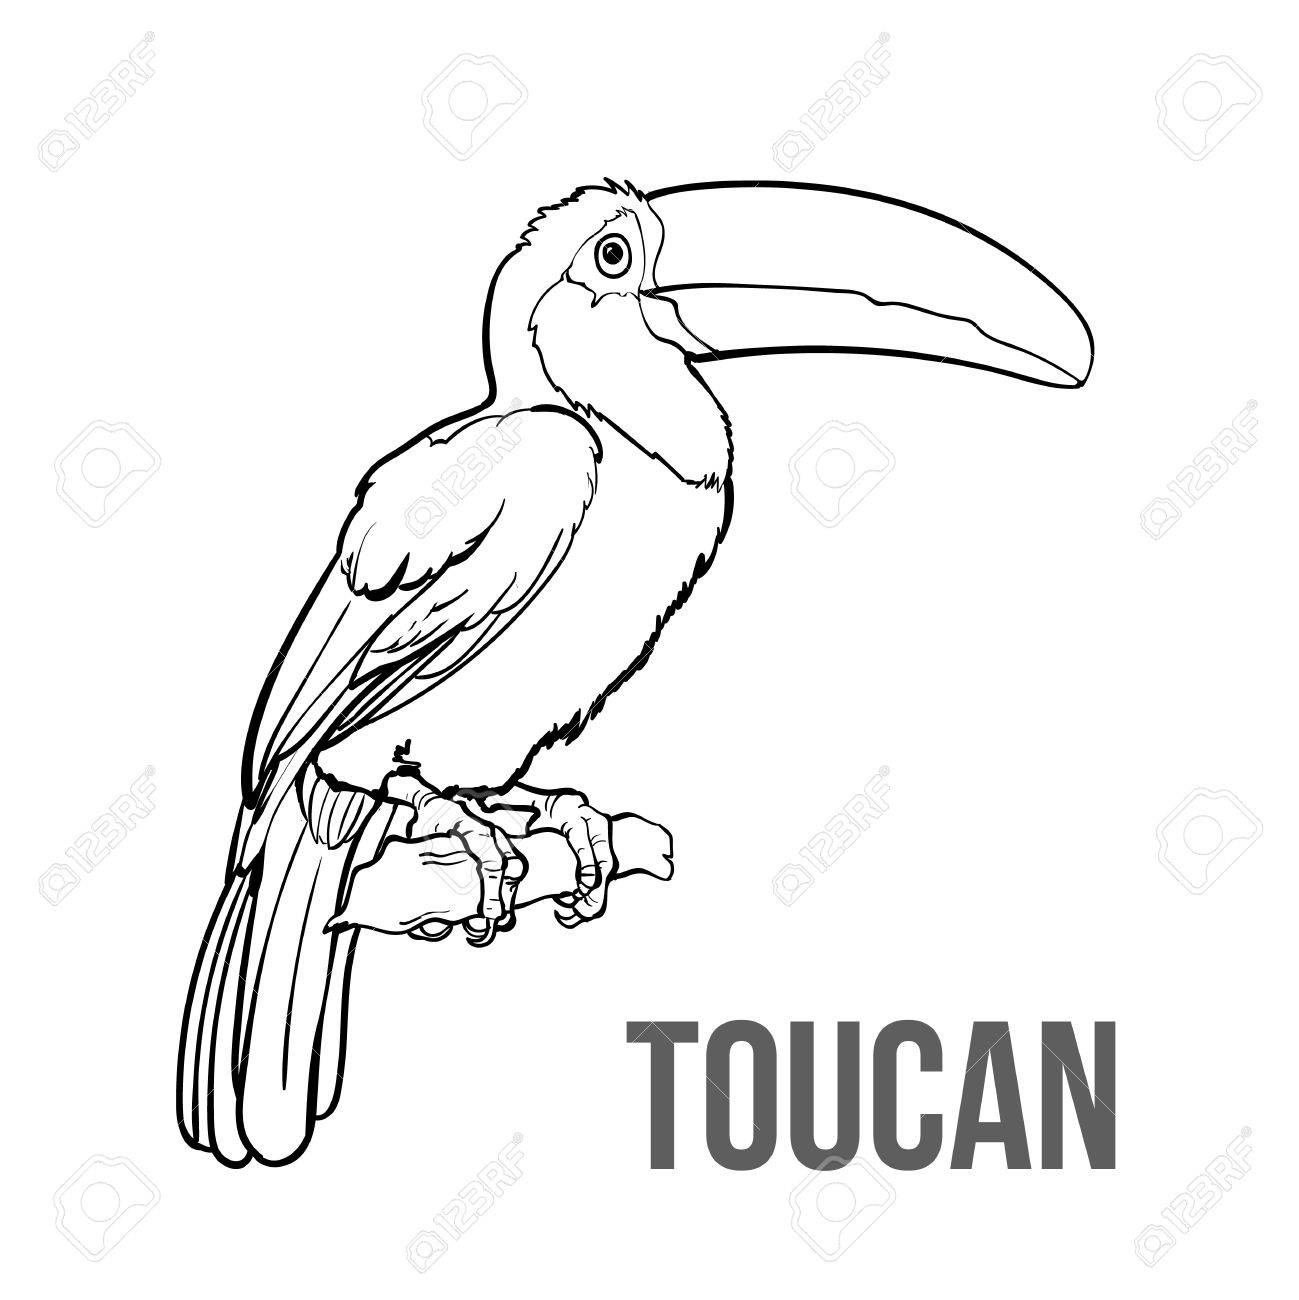 toucan clipart branch